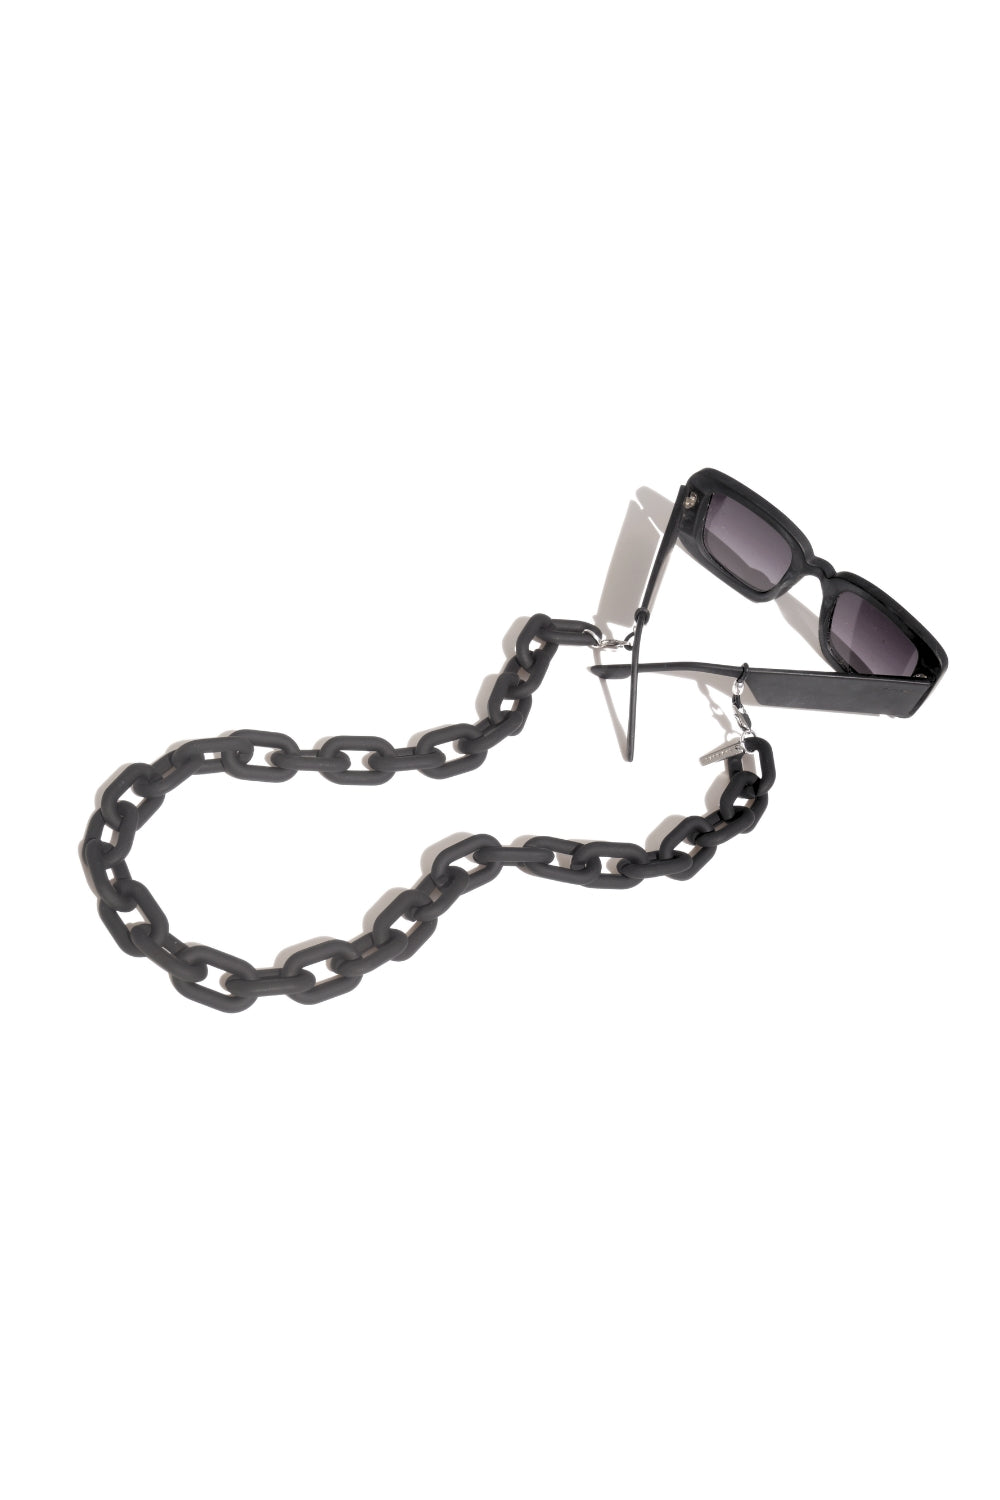 STANDOUT - MATTE BLACK Chunky Eyewear Chain | SPECSET